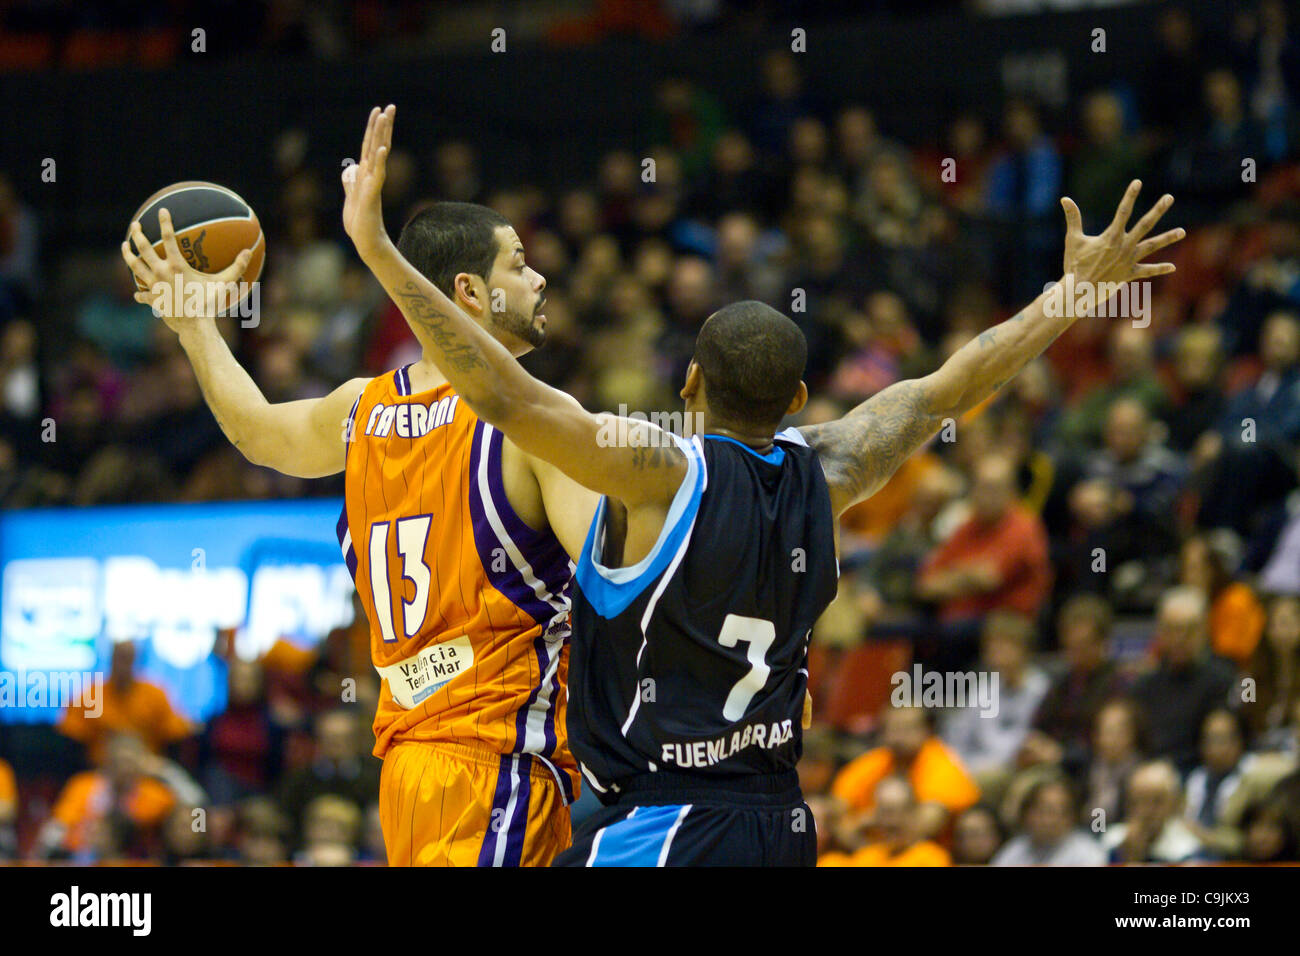 14/01//2011. Valencia, Espagne Liga Endesa Valencia Basket Club Basket vs Getafe - 16 - Sur 19:30 Faverani tient la balle avec une main en face de Michael Hall de Fuenlabrada Banque D'Images